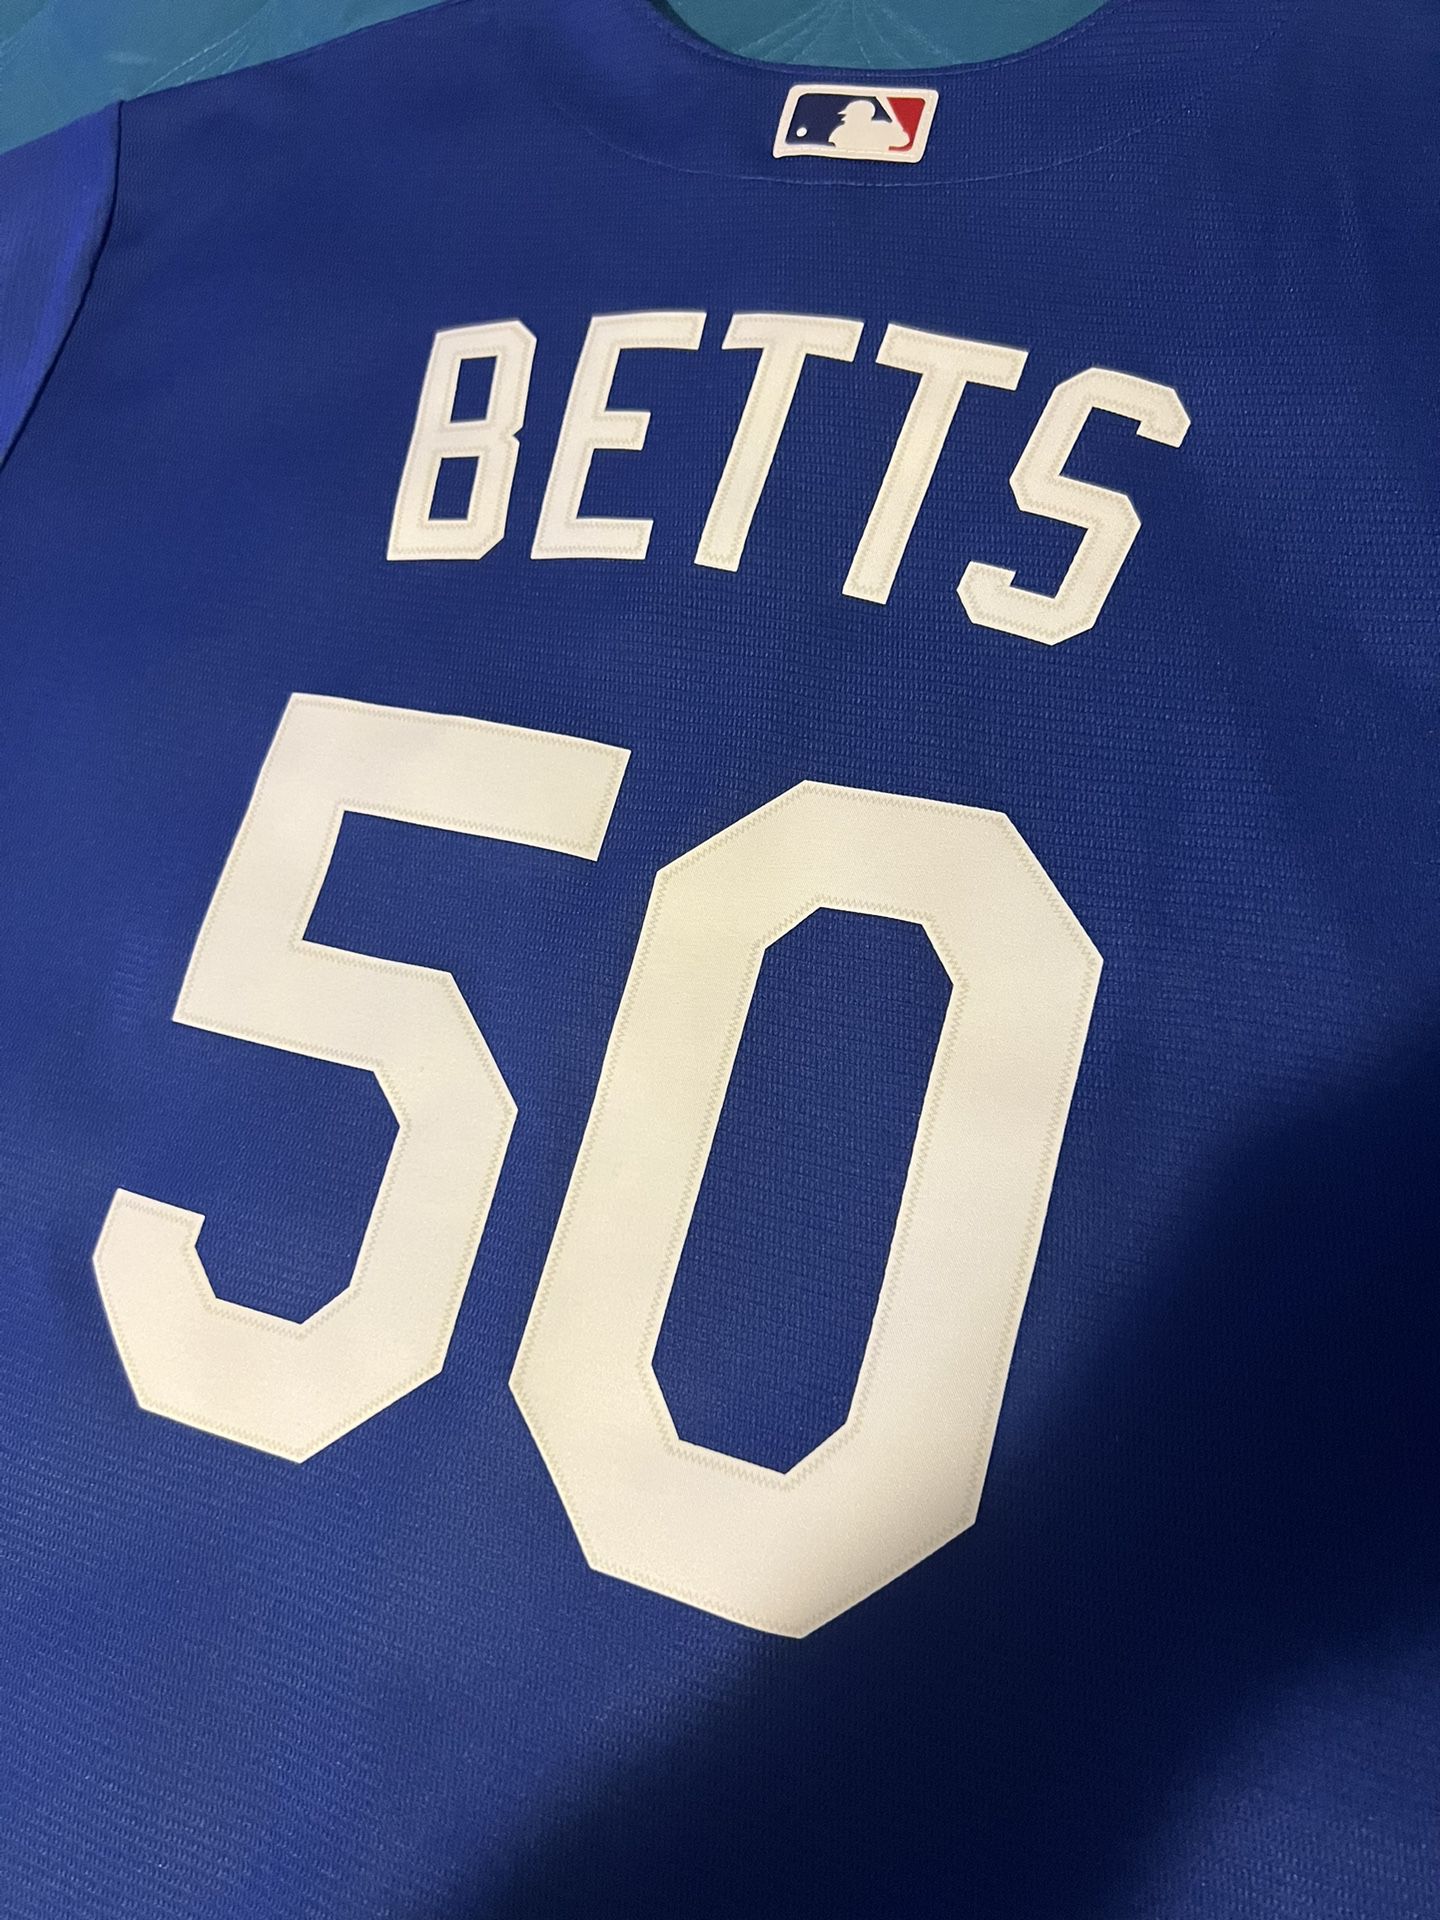 Dodgers Mookie Betts Jersey for Sale in Glmn Hot Spgs, CA - OfferUp